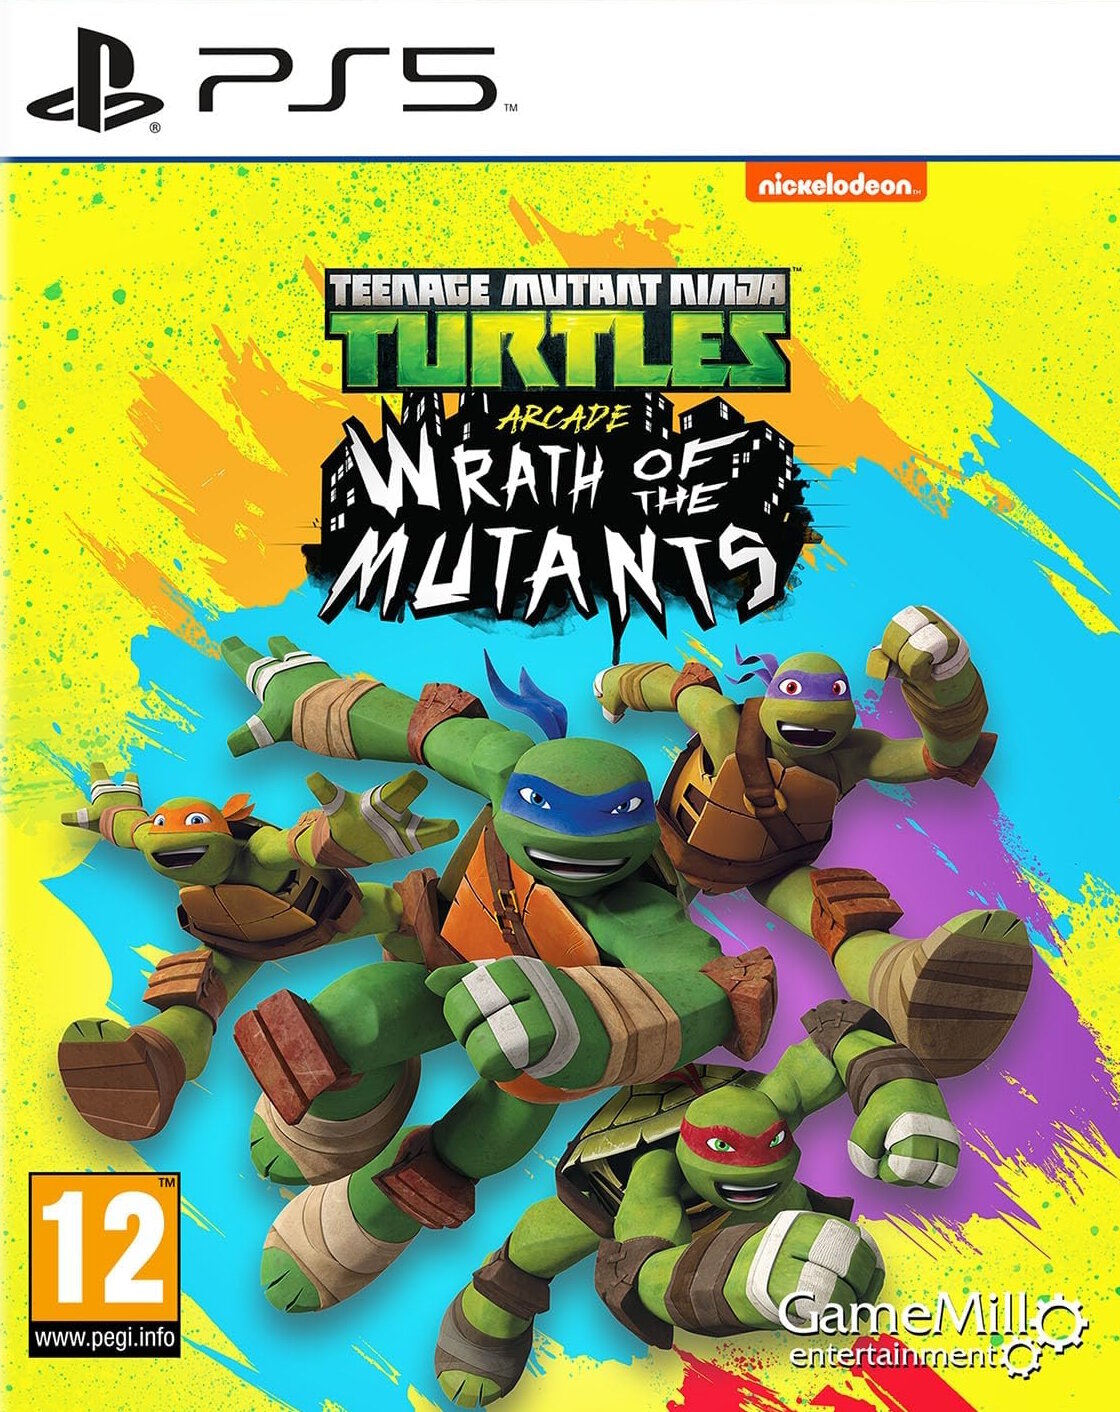 TMNT Teenage Mutant Ninja Turtles (Черепашки Ниндзя) Arcade: Wrath of the Mutants (PS5) английский язык